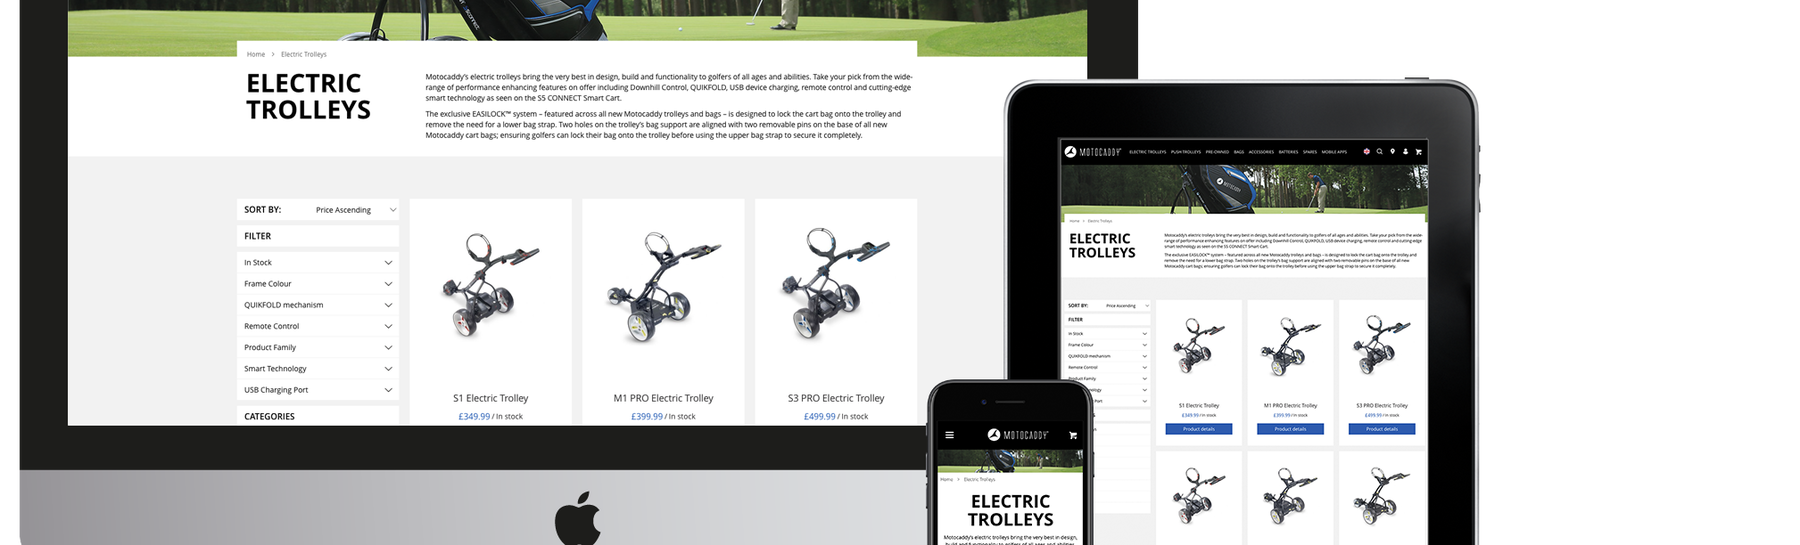 Motocaddy Website Launch